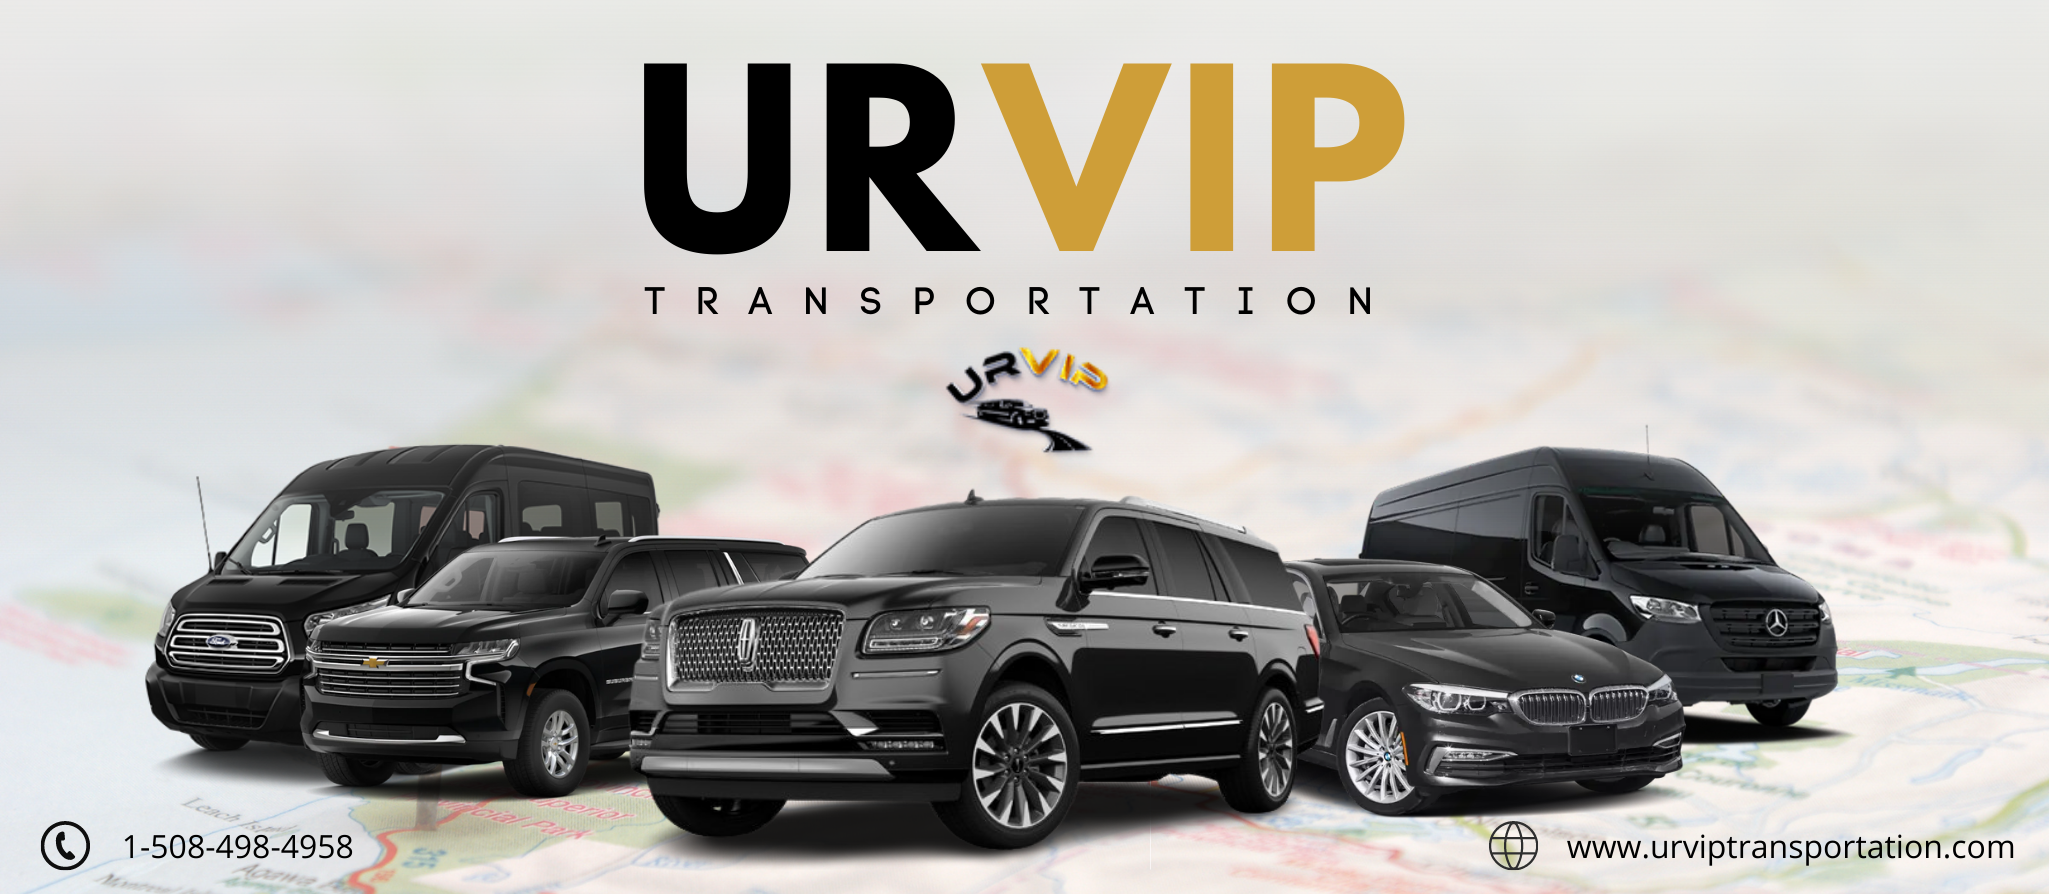 URVIP luxury fleet in Boston for any ocasion